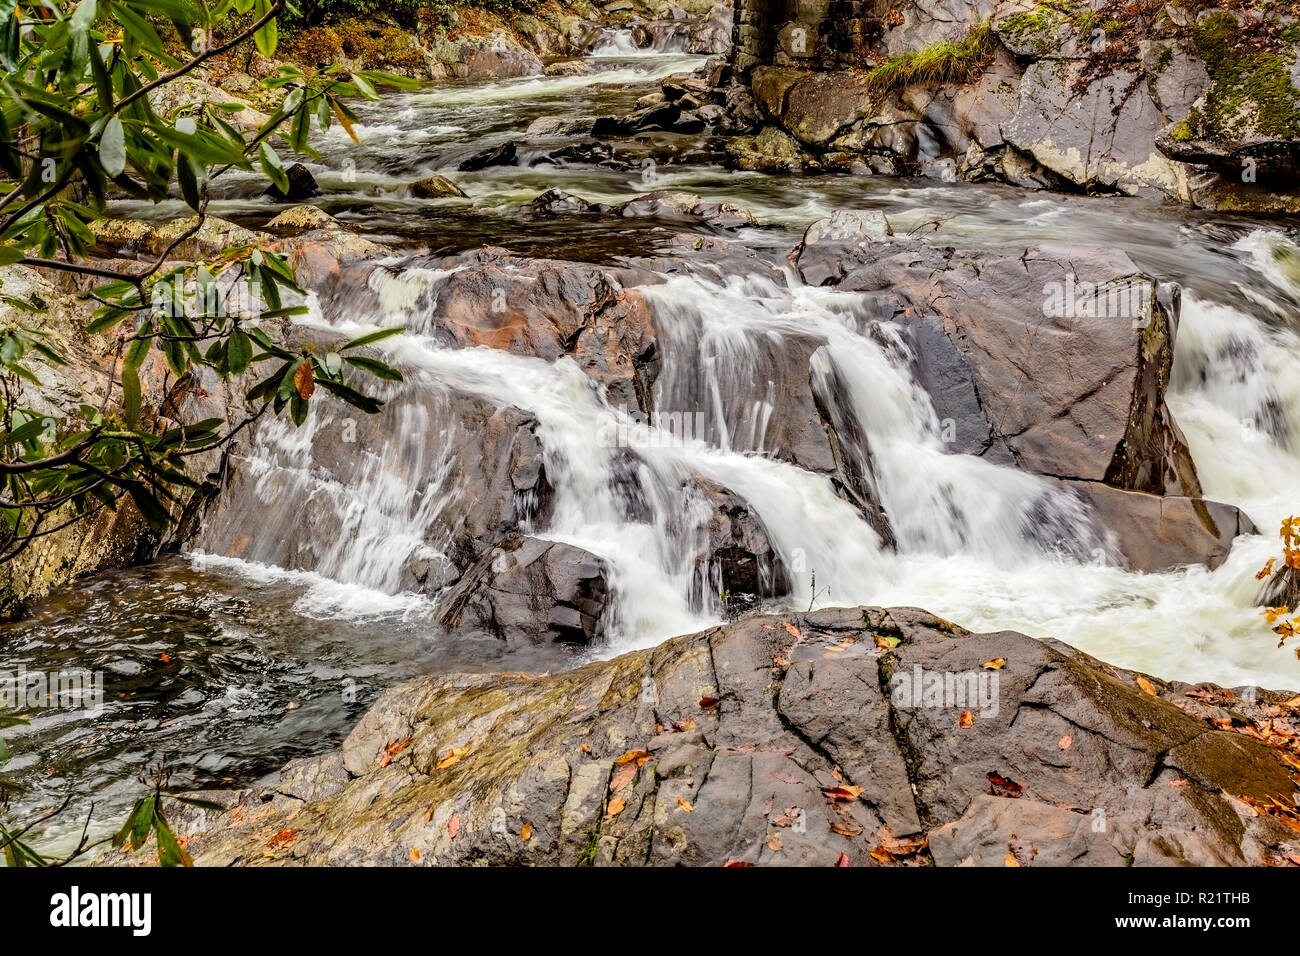 Great Smoky Mountains National Park waterfall. Stock Photo